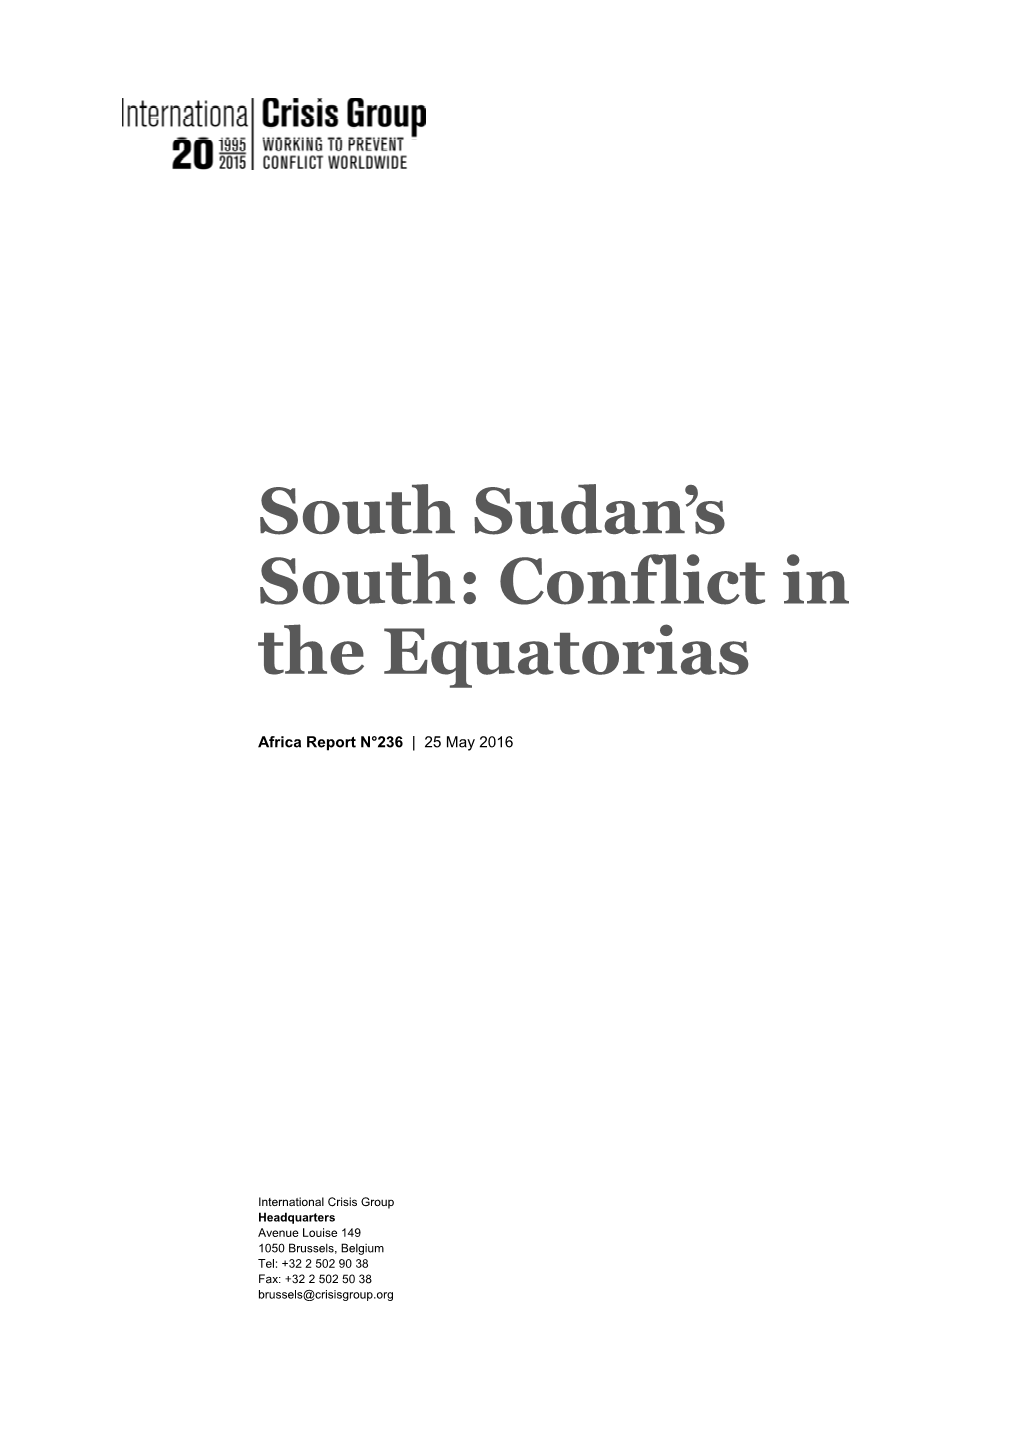 South Sudan's South